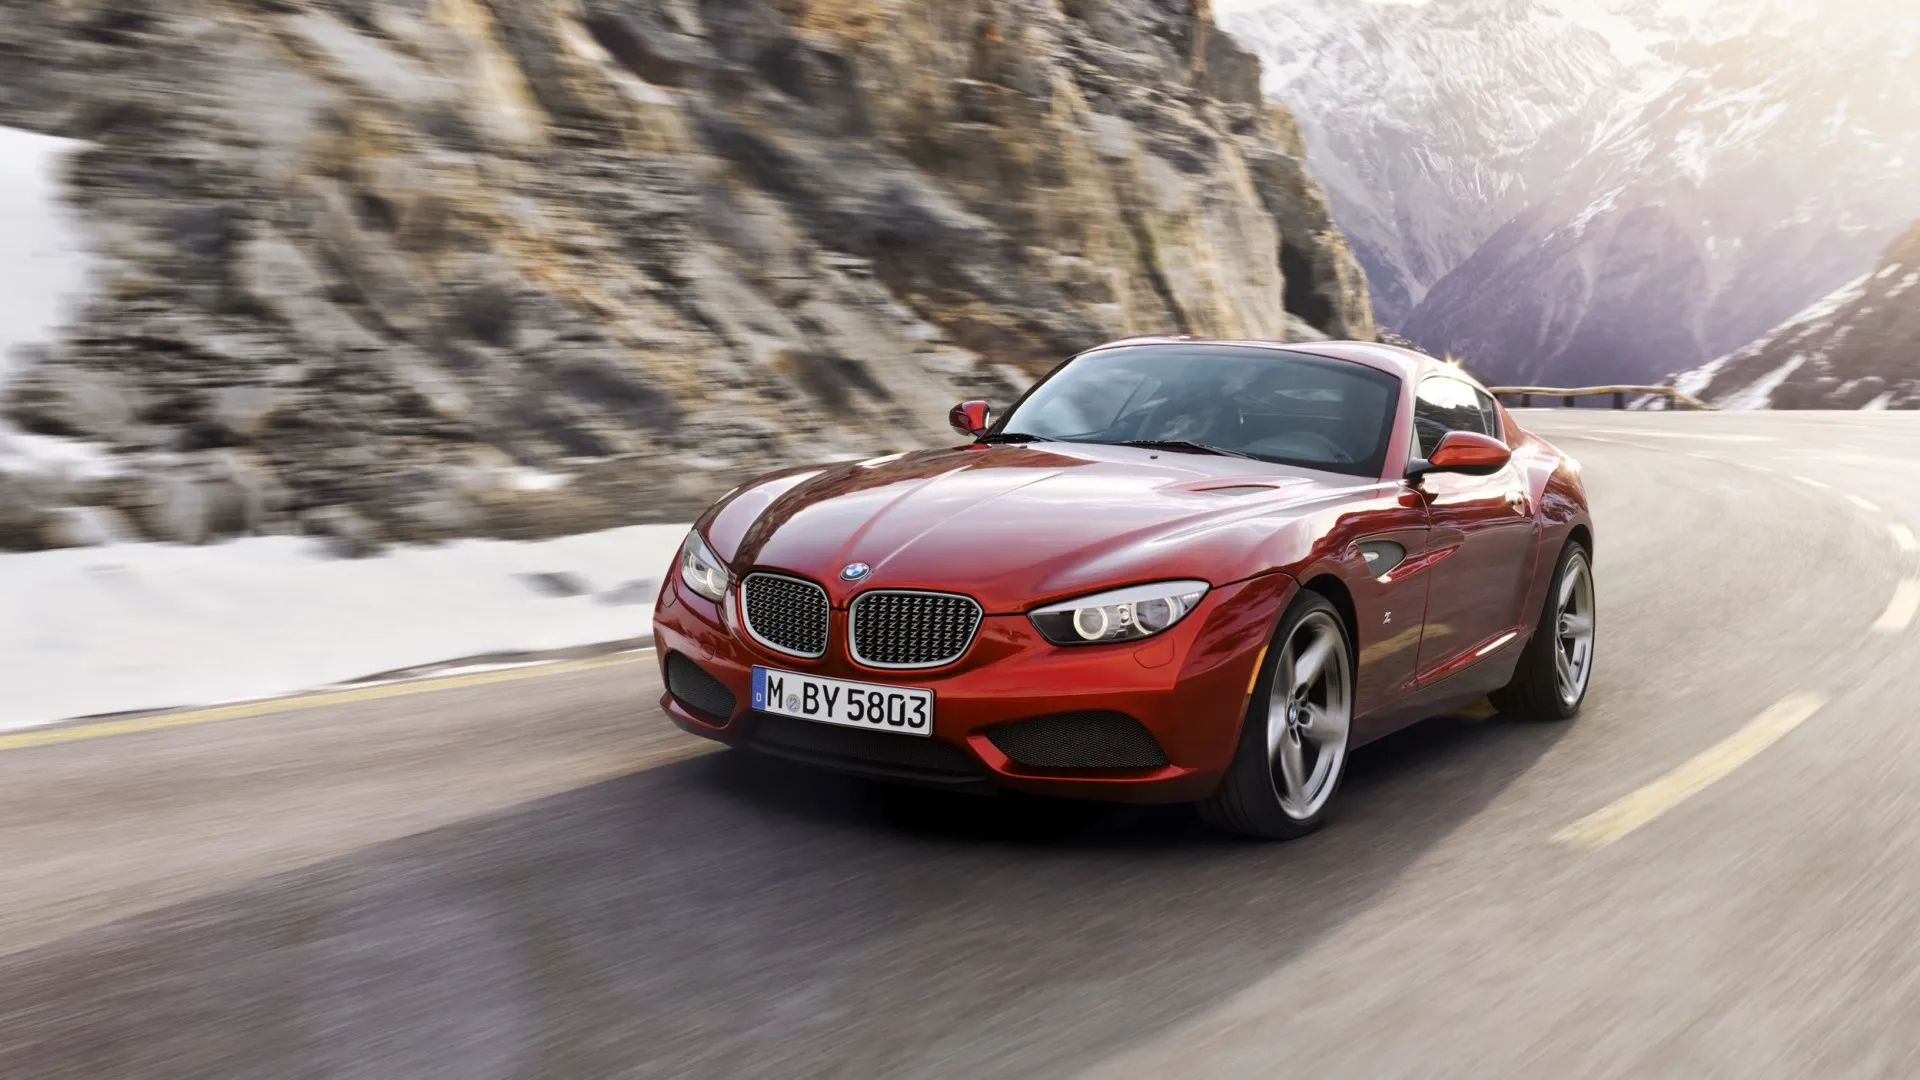 Coche del día: BMW Zagato Coupé 2012